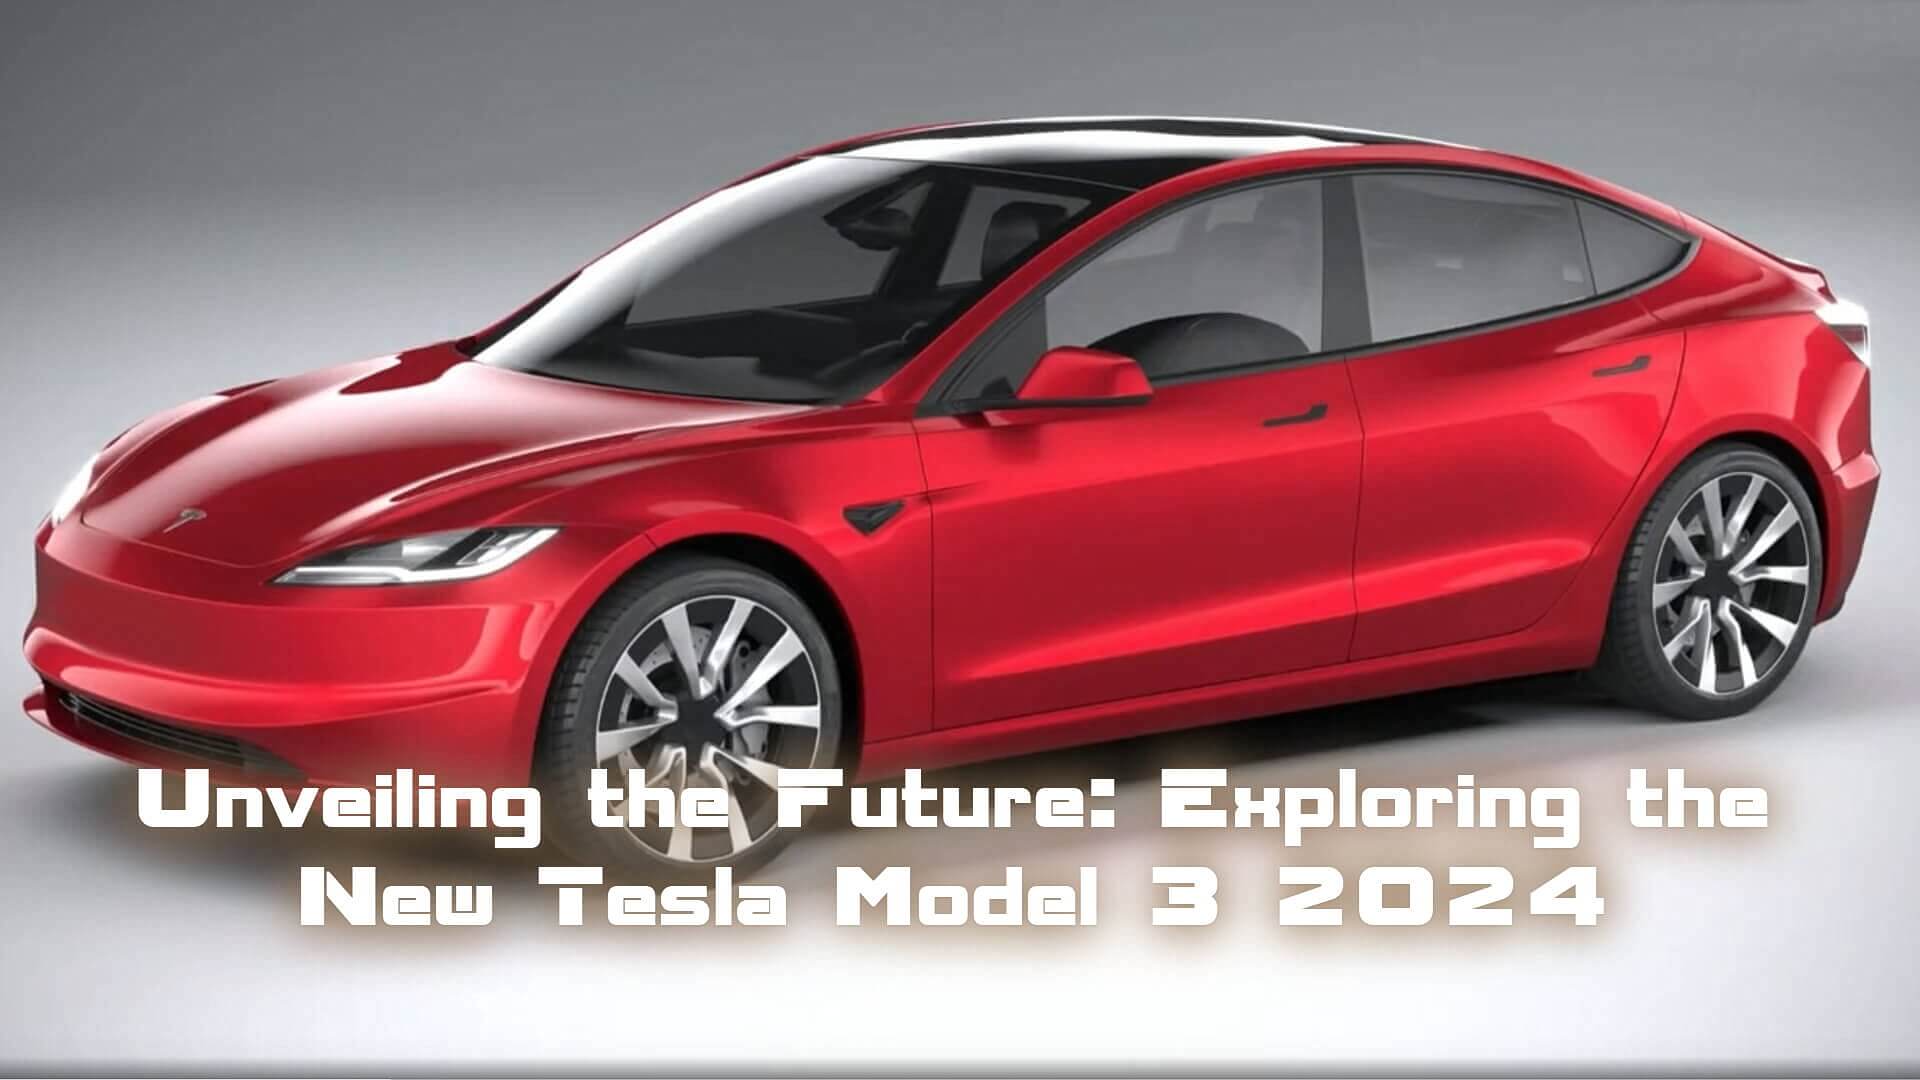 Exploring the New Tesla Model 3 2024